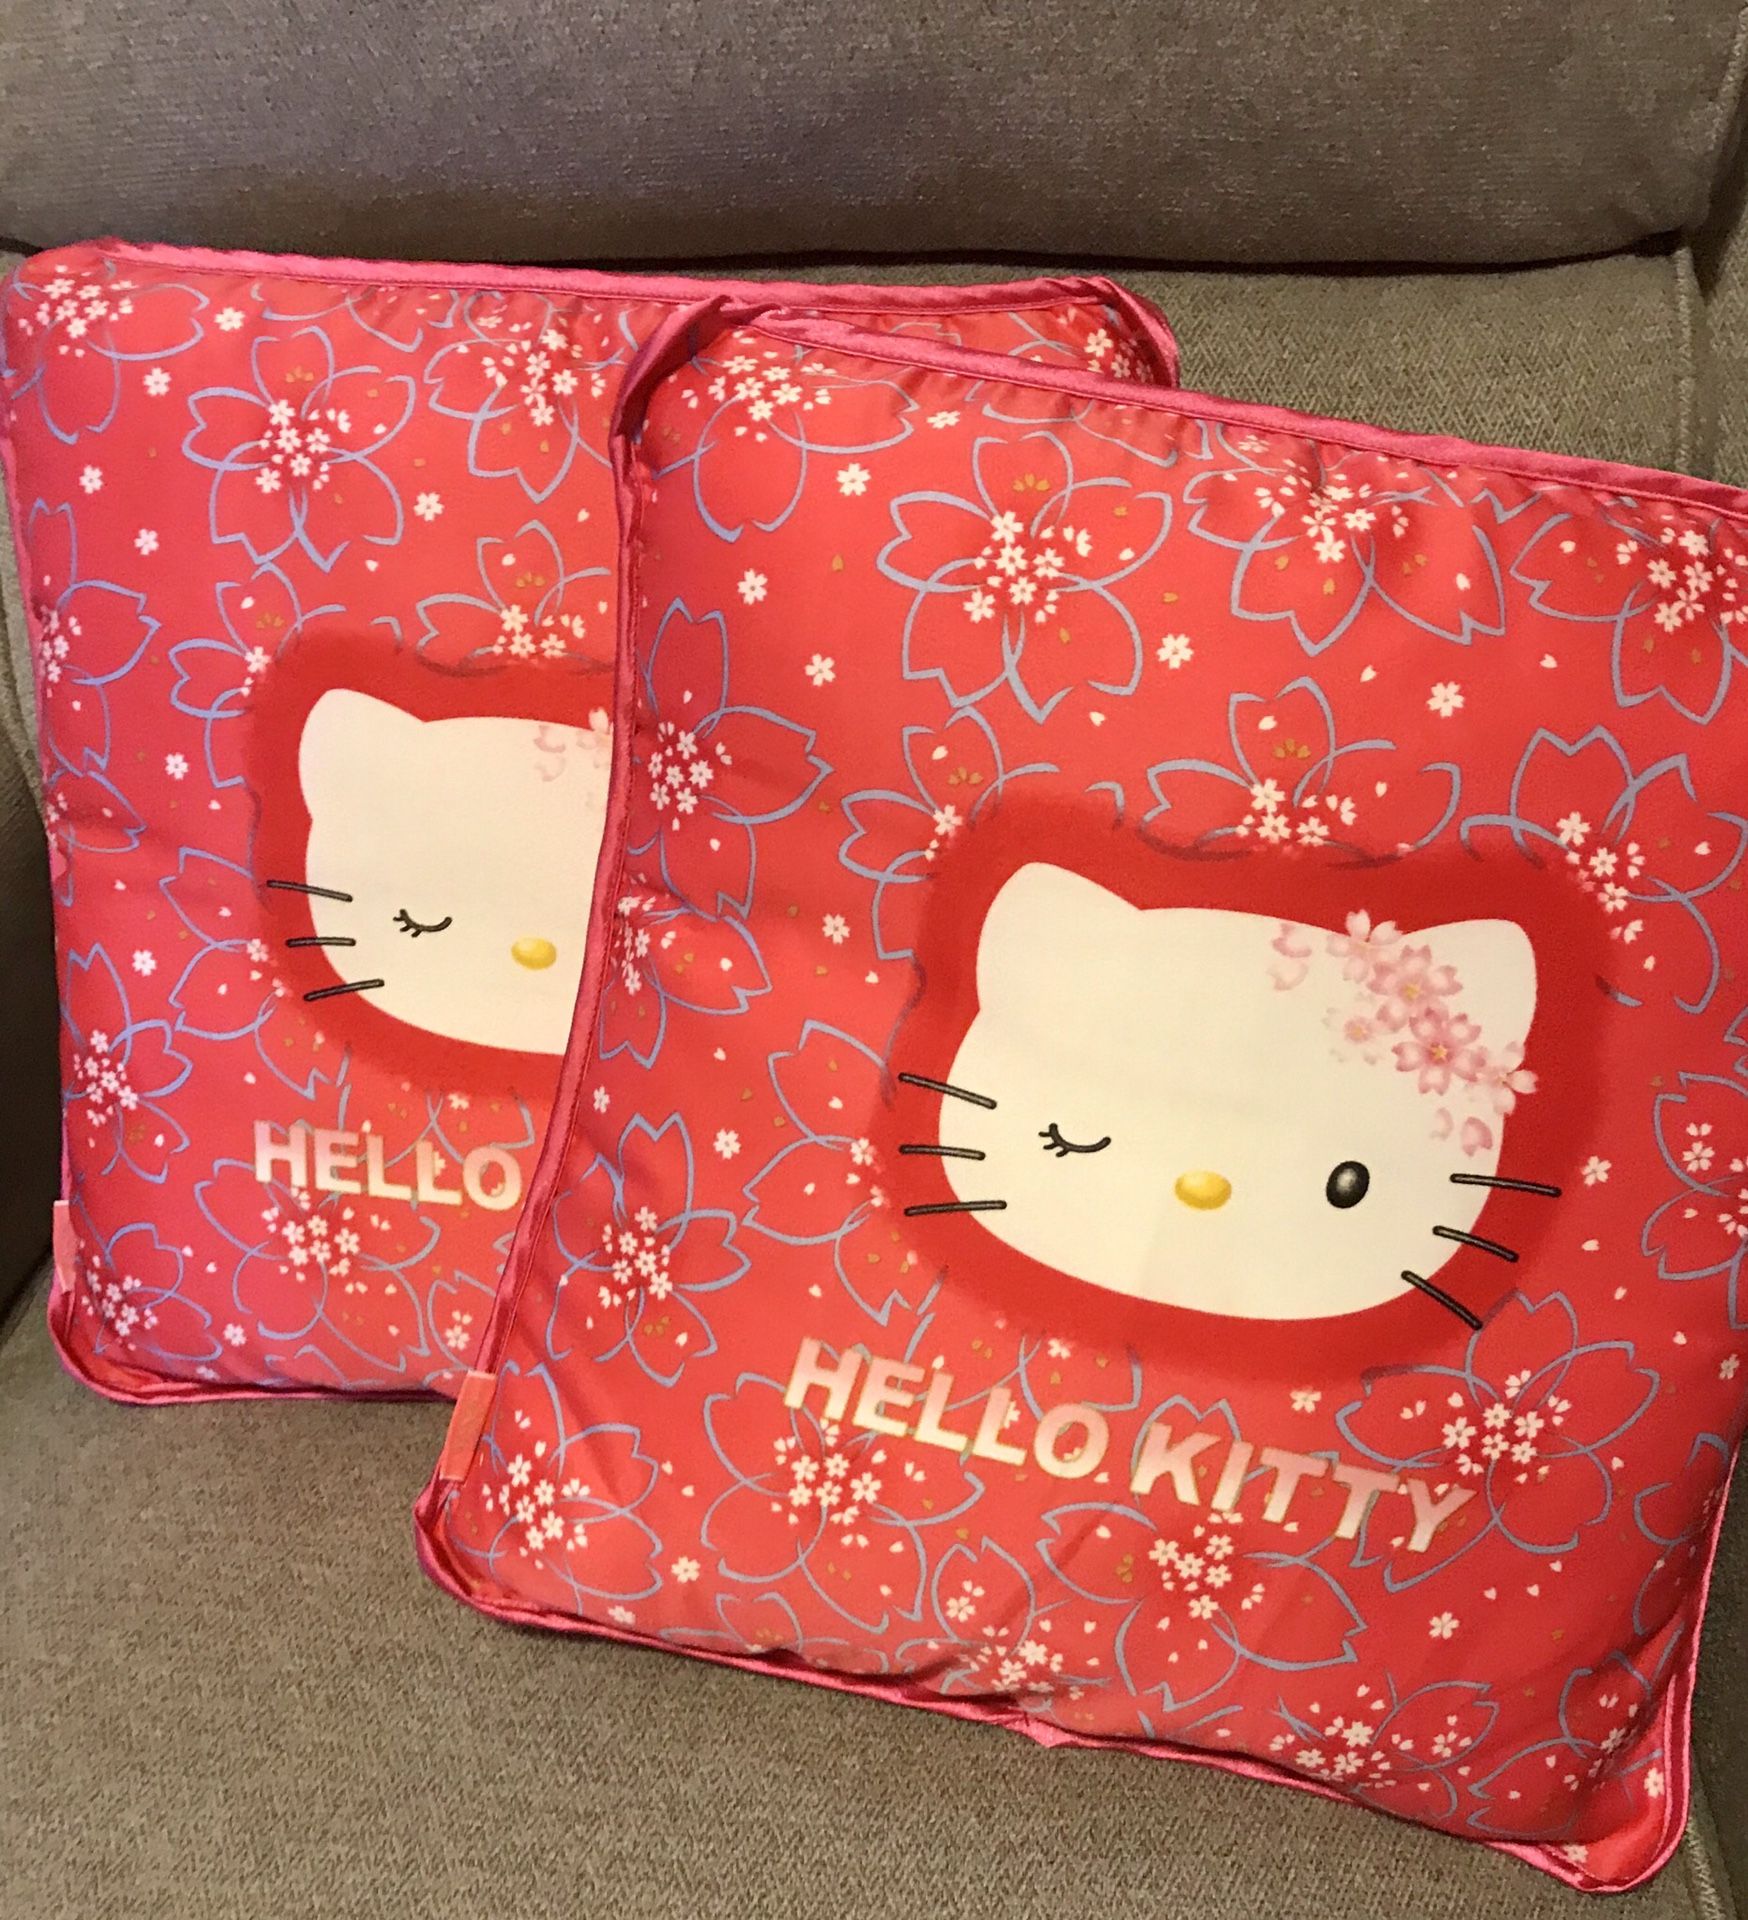 Two Hello Kitty 12x12 decor pillows. Still new